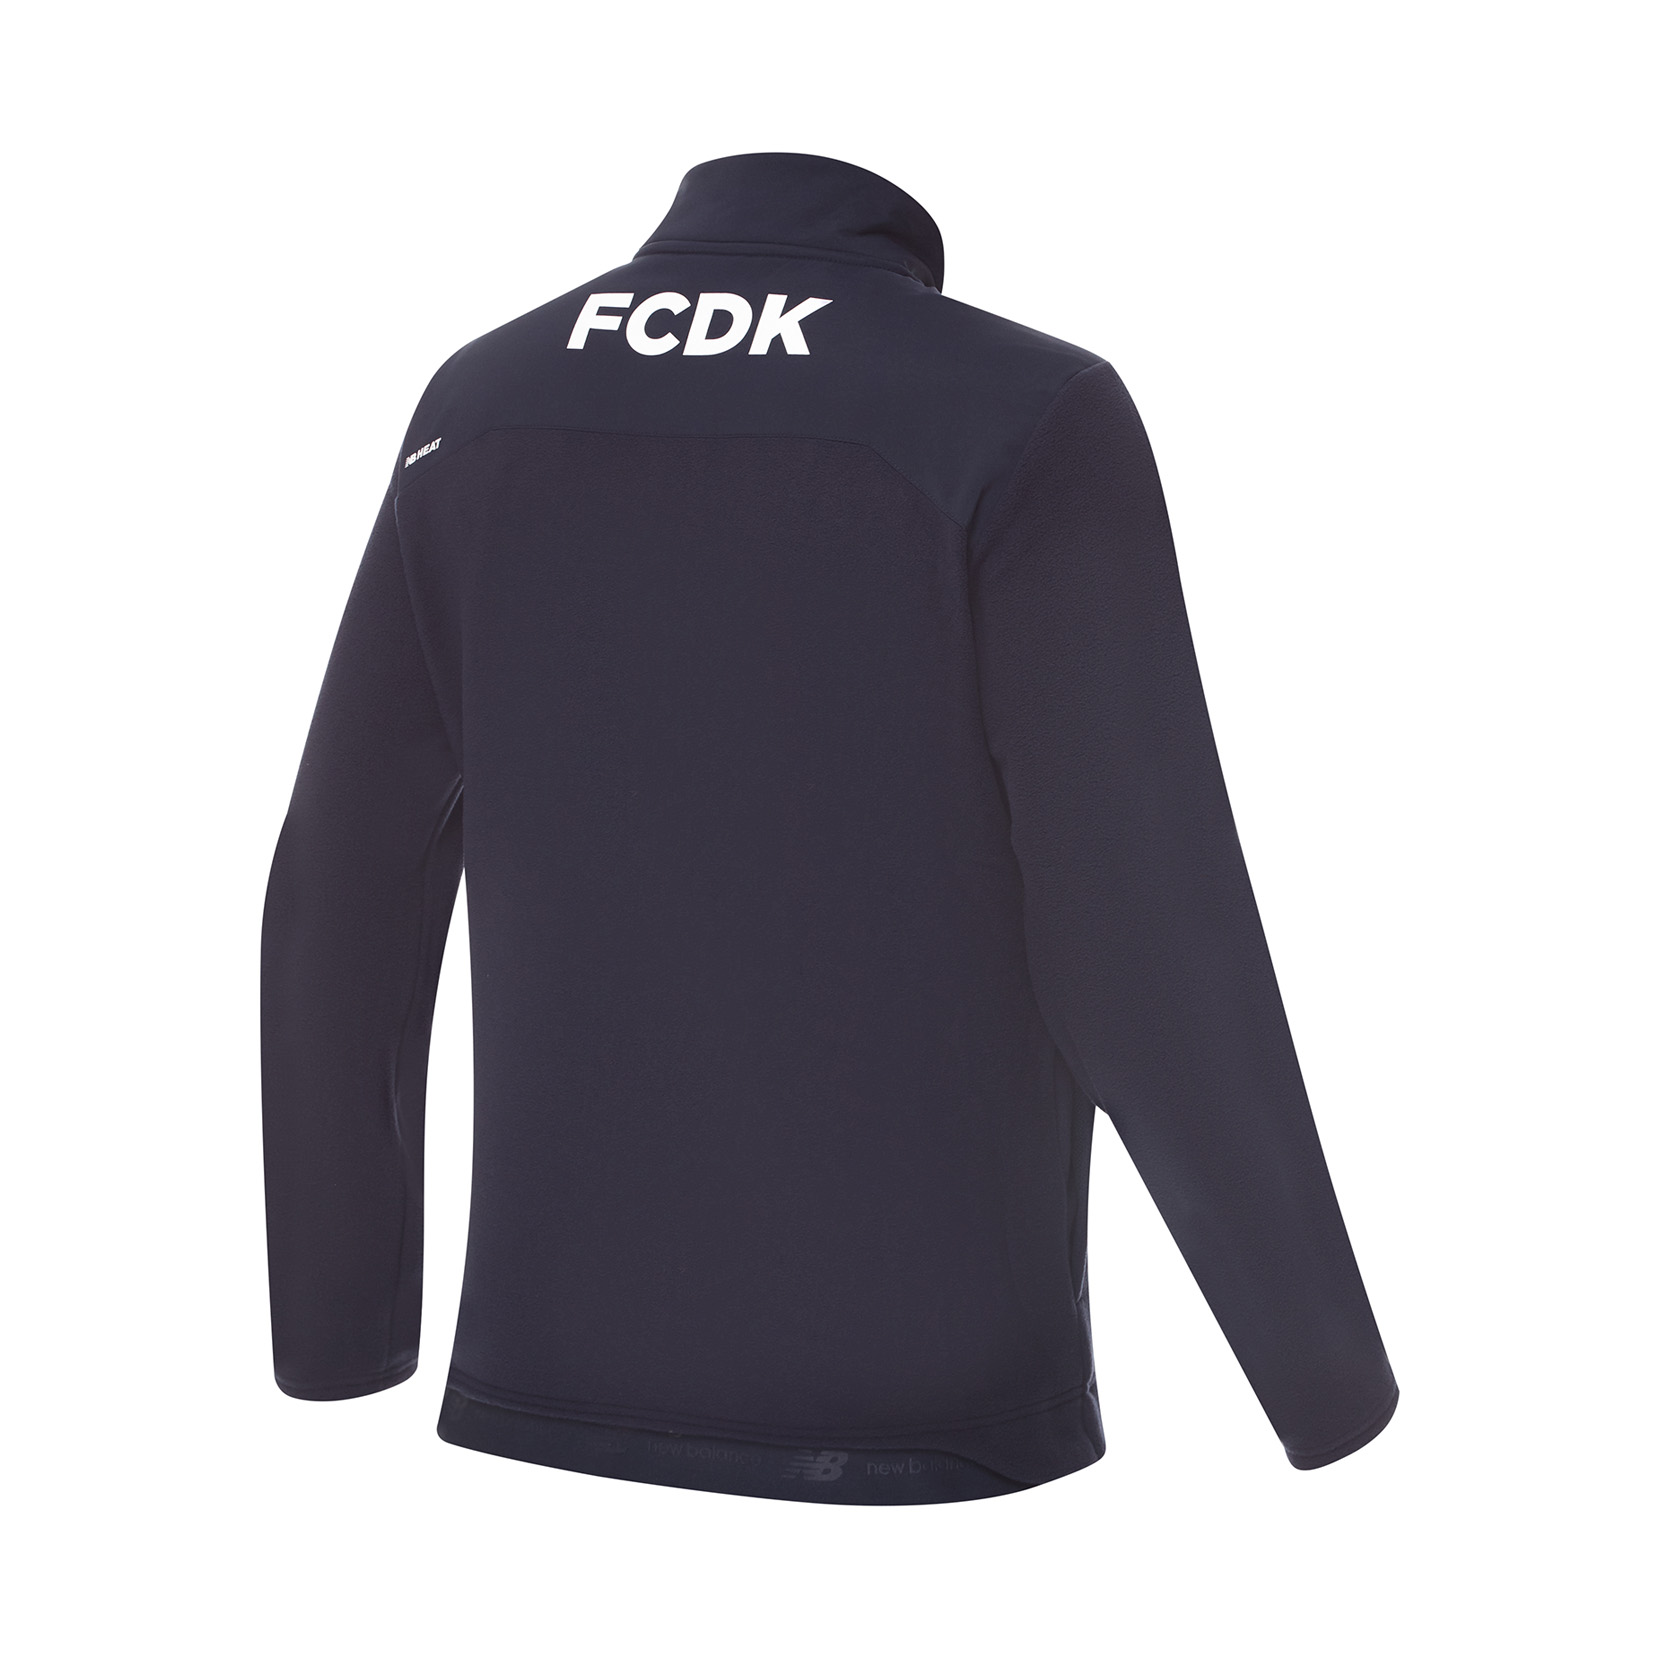 FCDK navy blue sweater